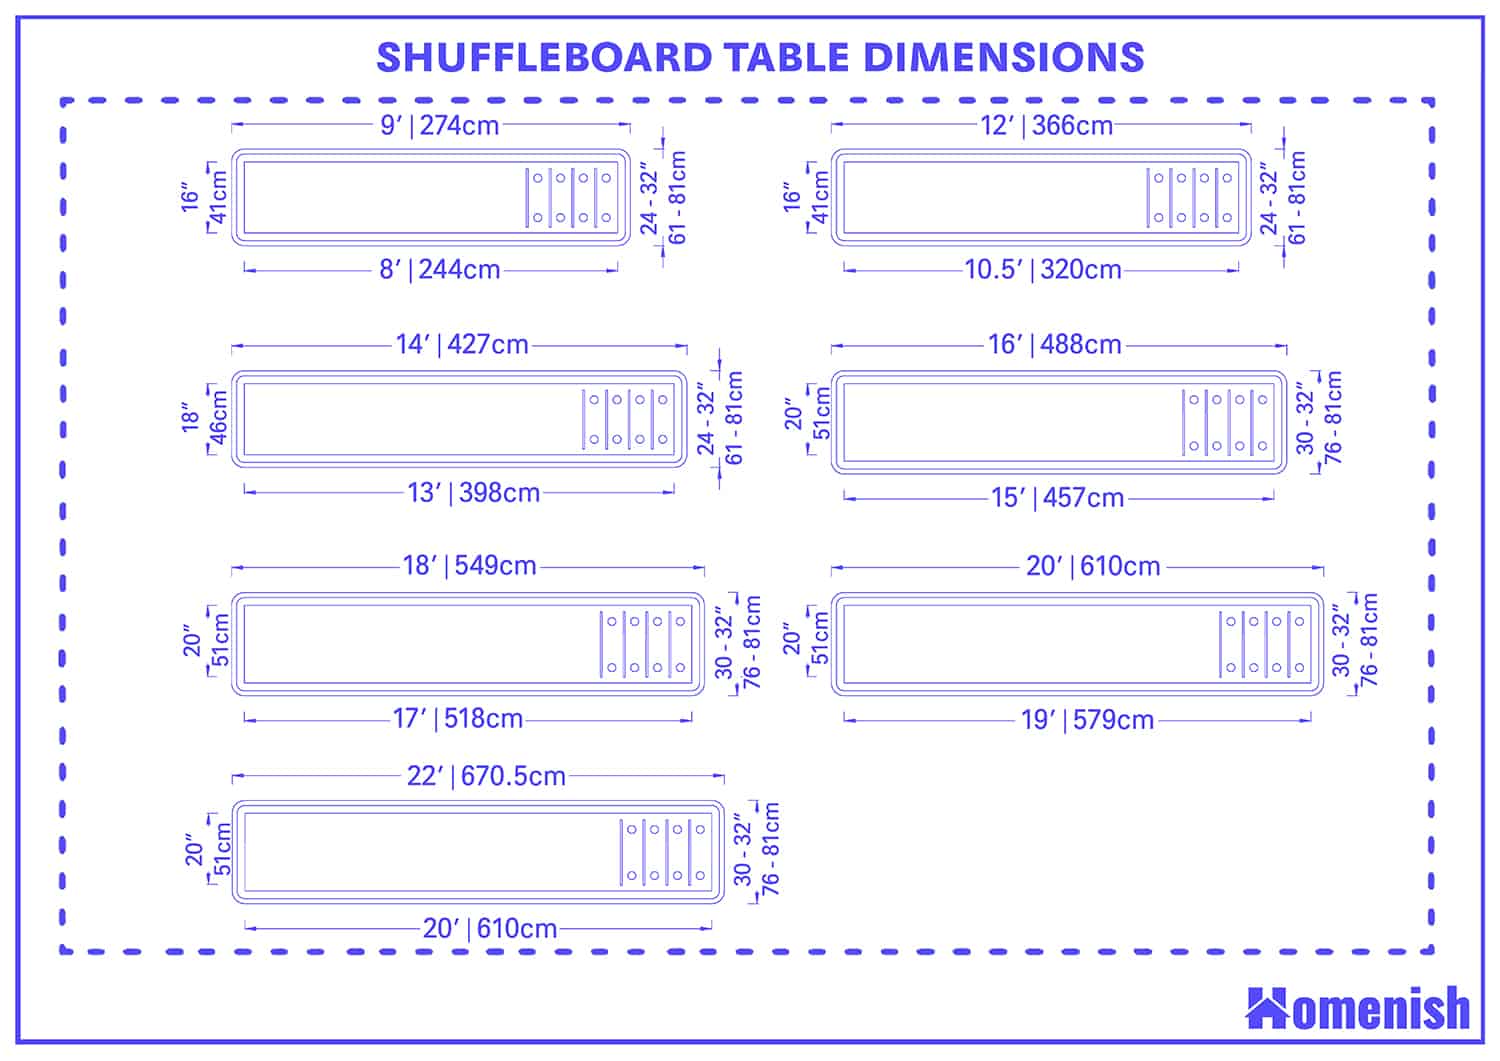 Shuffleboard Table Dimensions